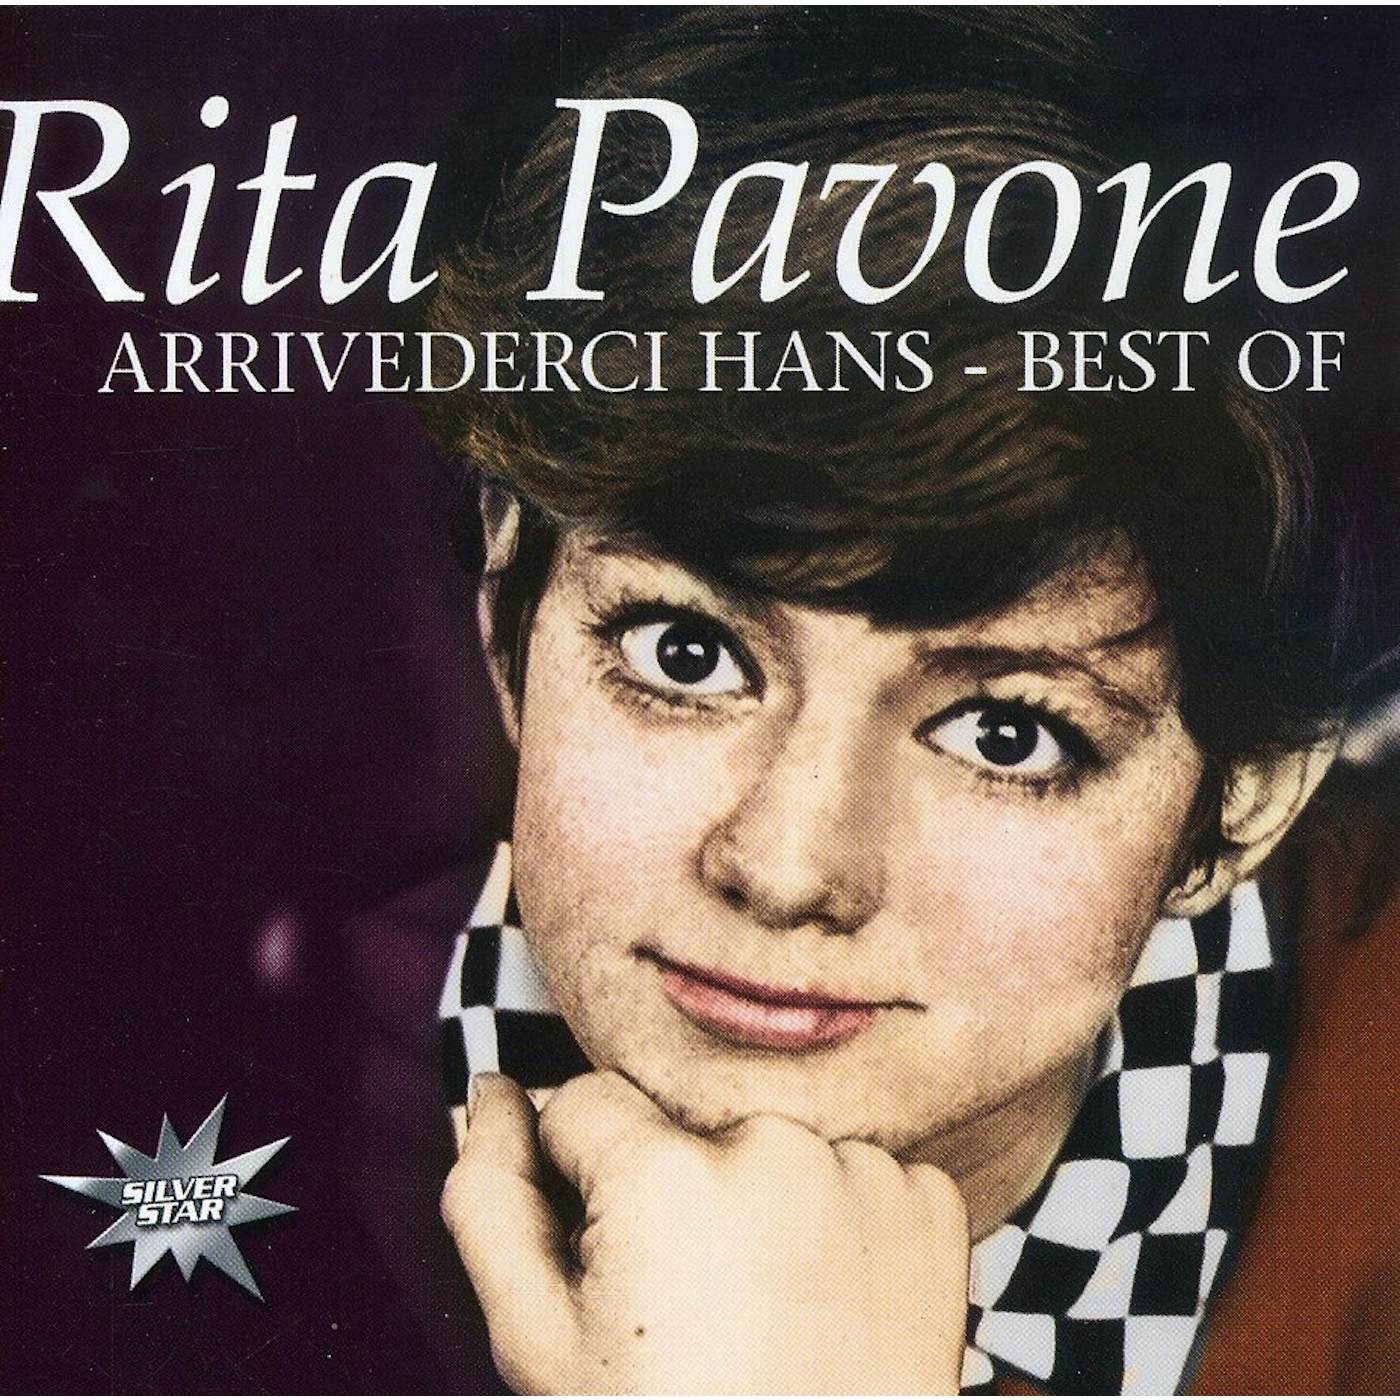 Rita Pavone BEST OF CD